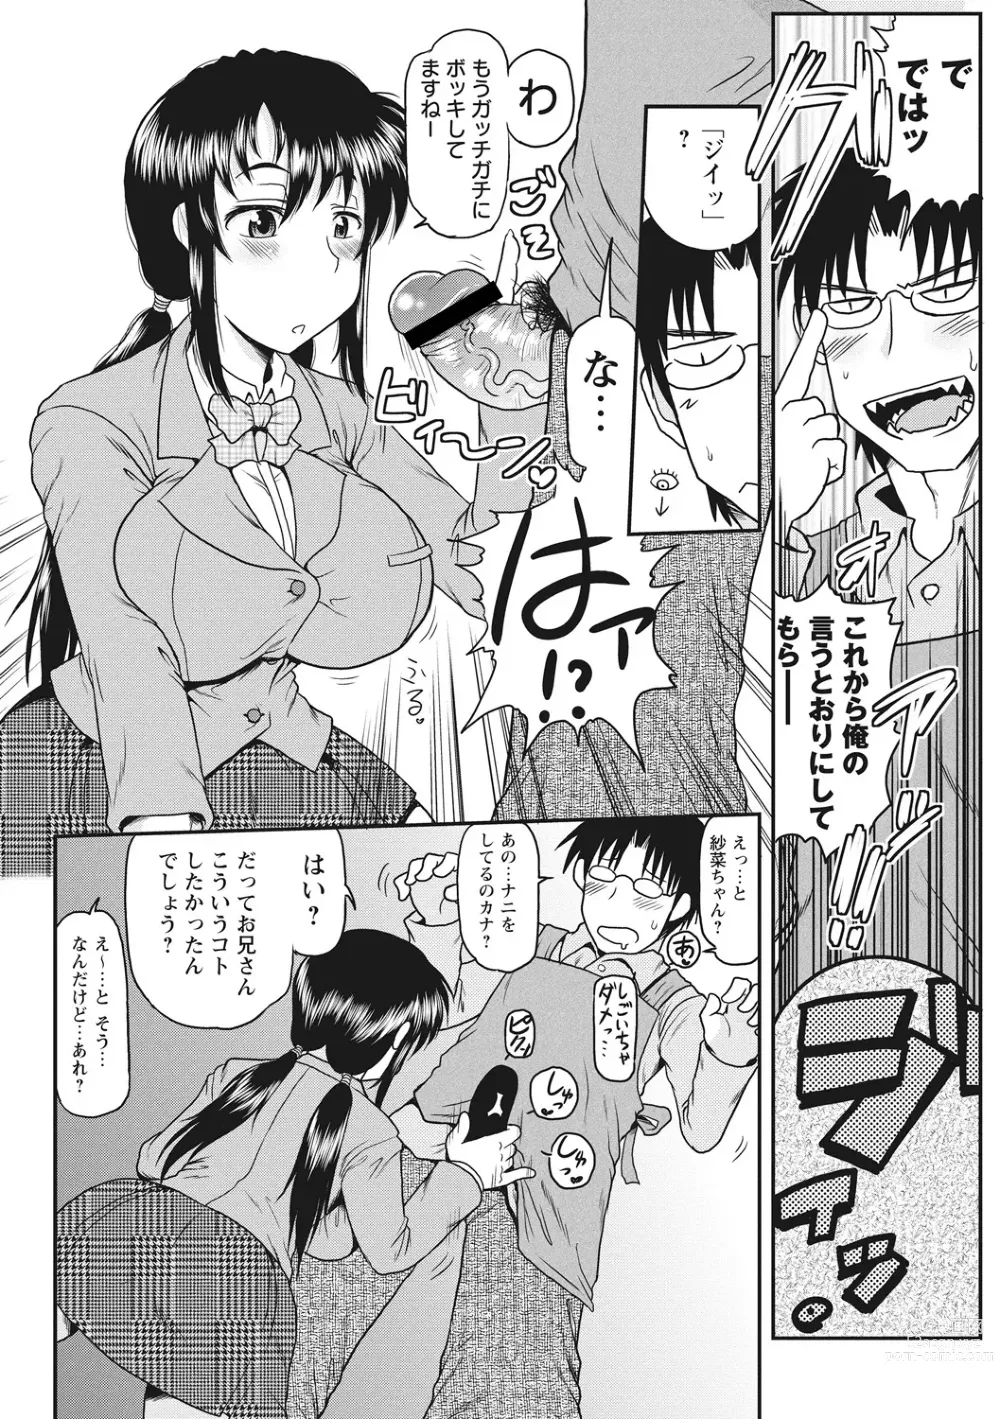 Page 9 of manga Deep Impact